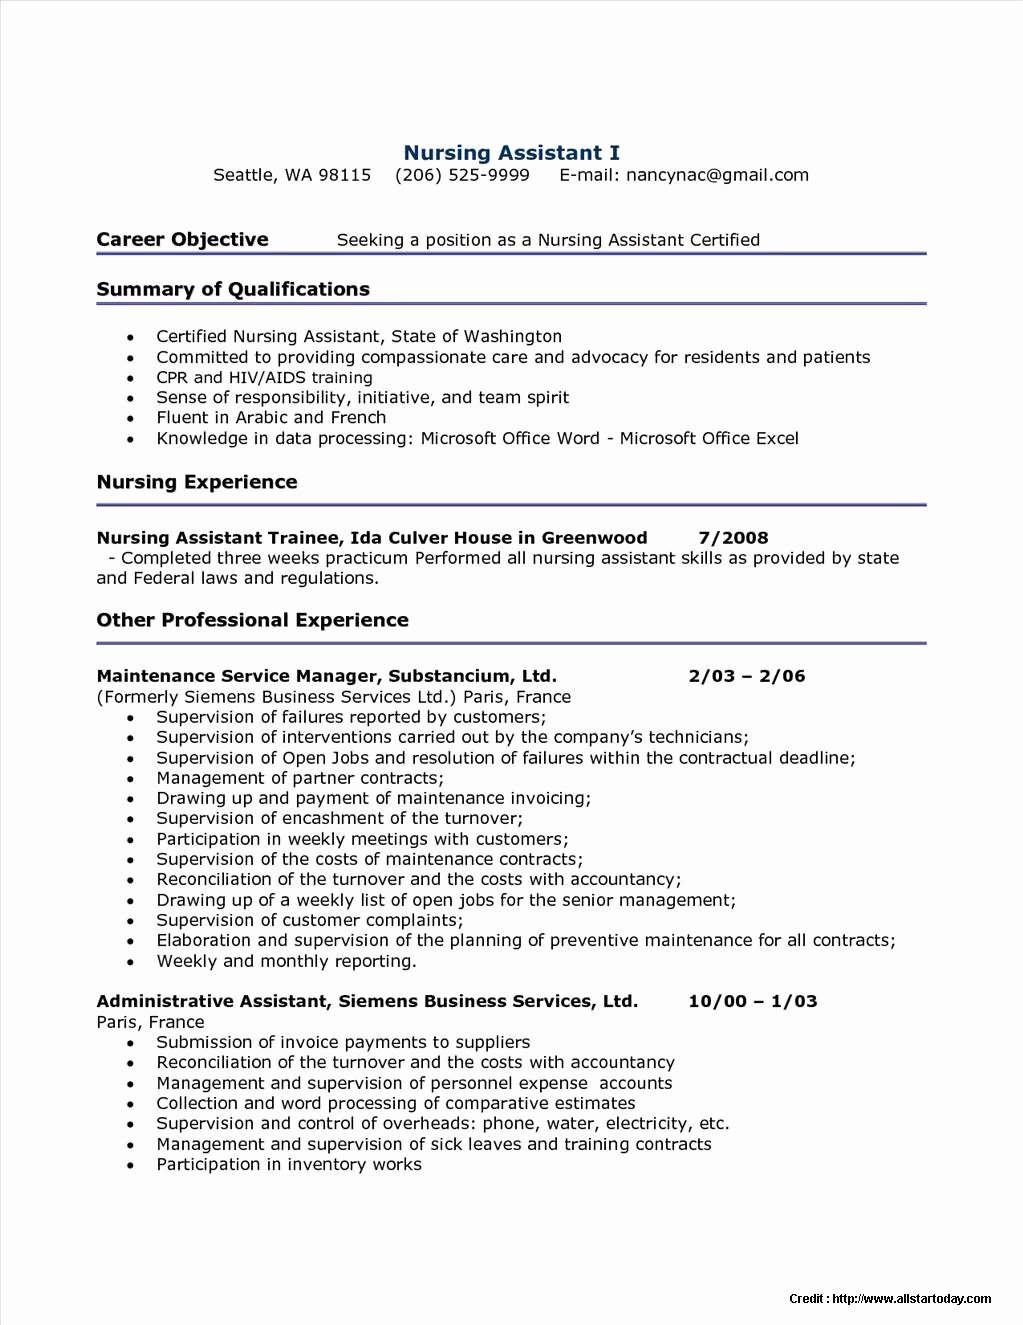 Sample Resume for Nursing assistant Student Resume